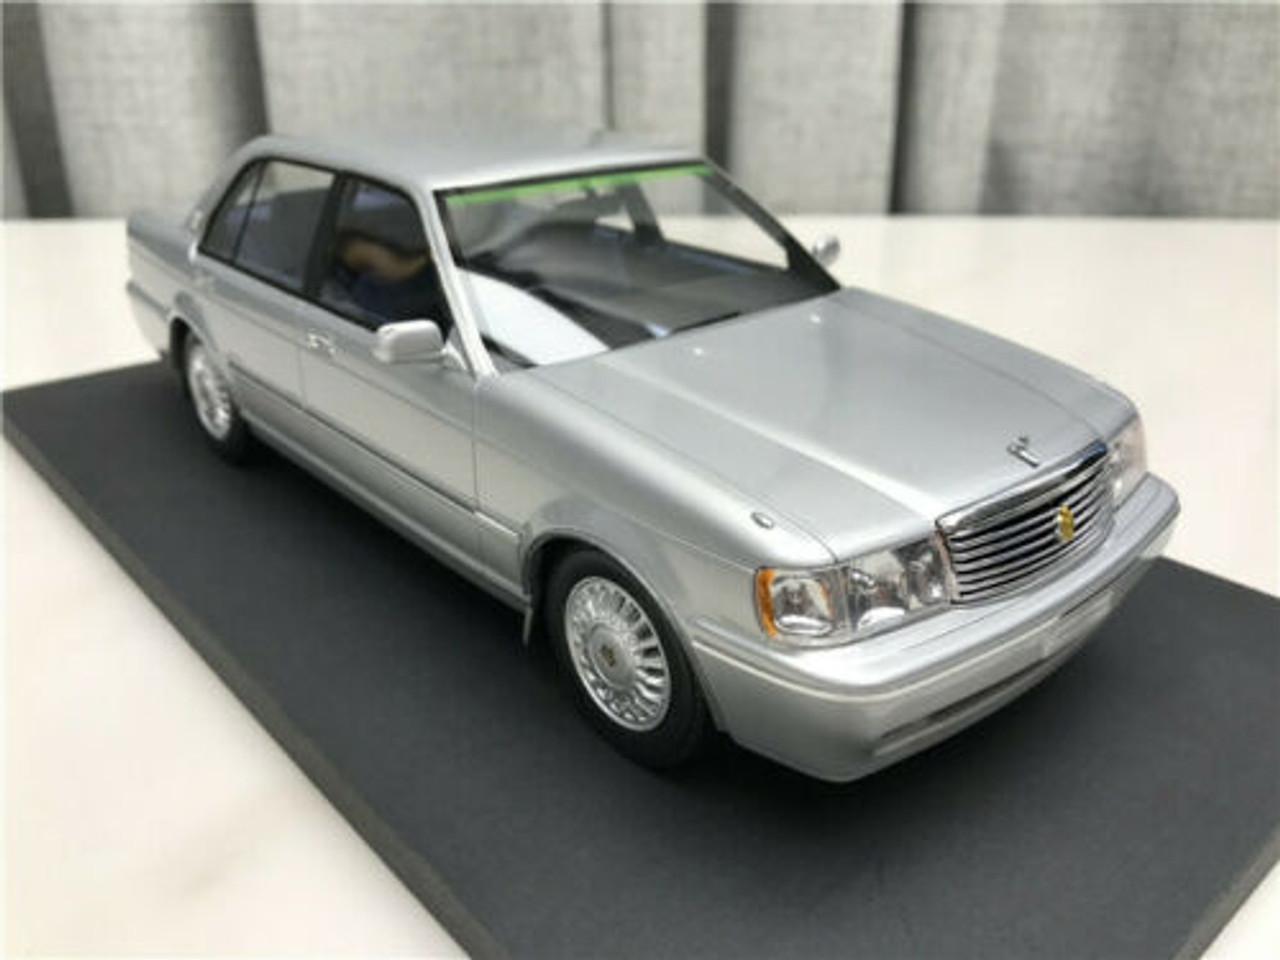 1/18 Dealer Edition Toyota Crown 133 (Silver) Enclosed Resin Car Model